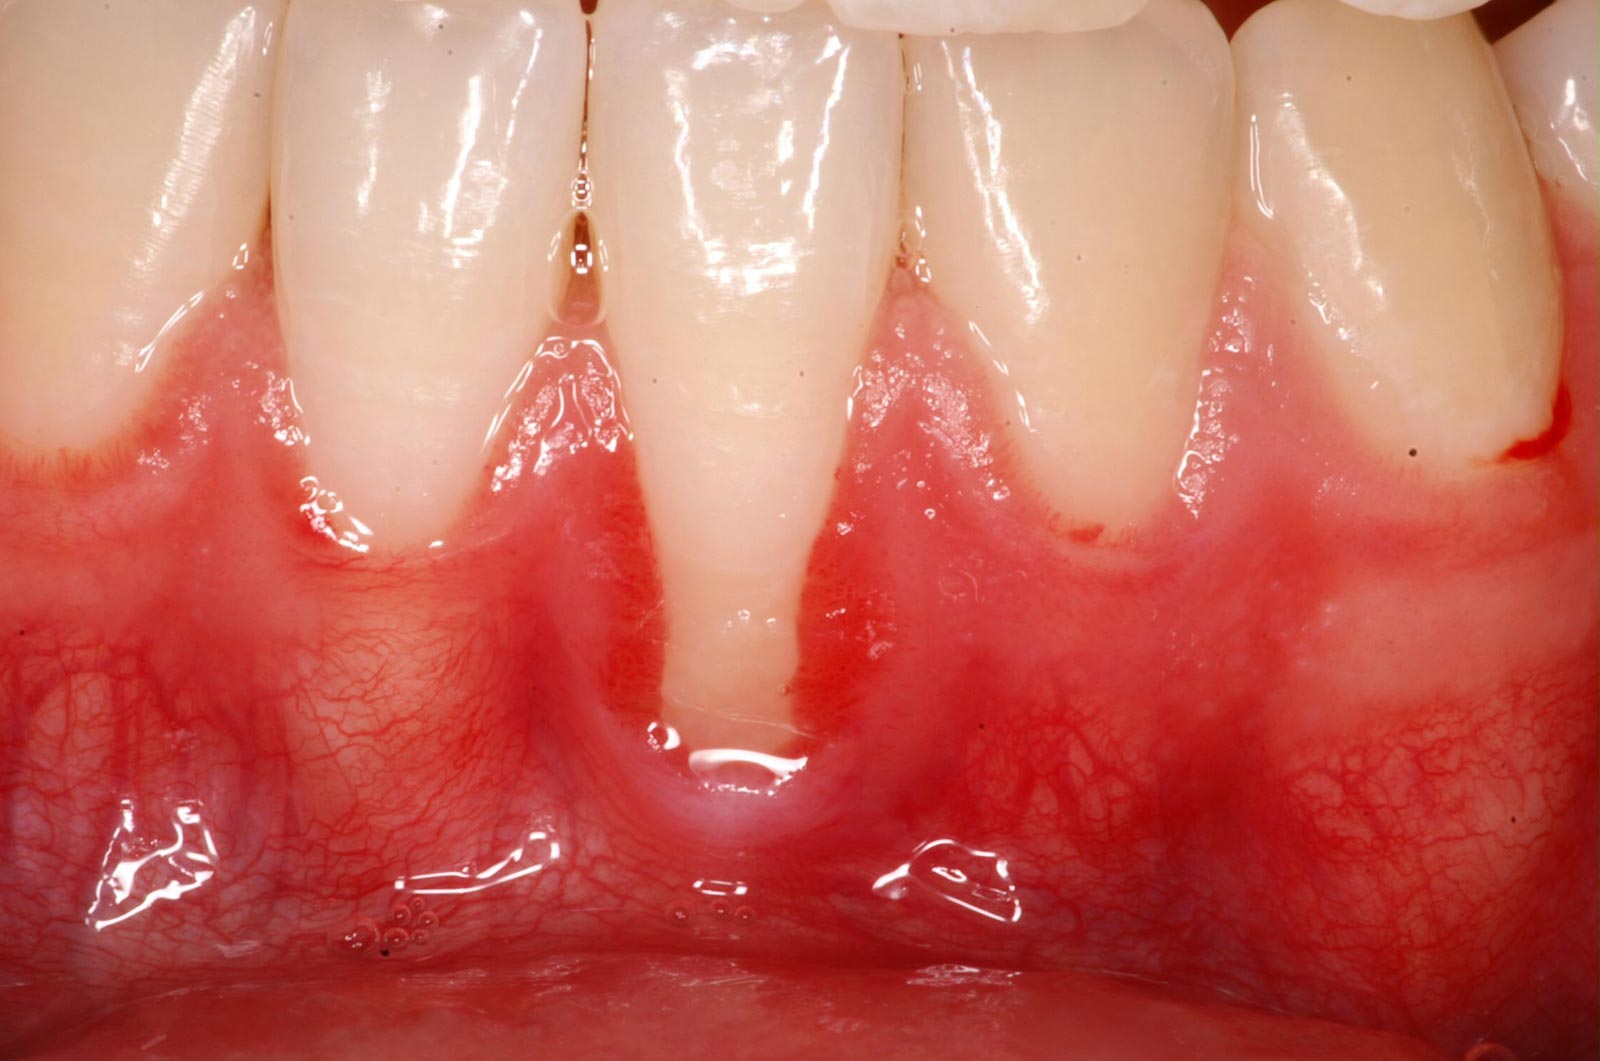 centro-odontostomatologico-coppola-dentista-gallarate-dentista-varese-terapia-parodontologia-maffei-pre